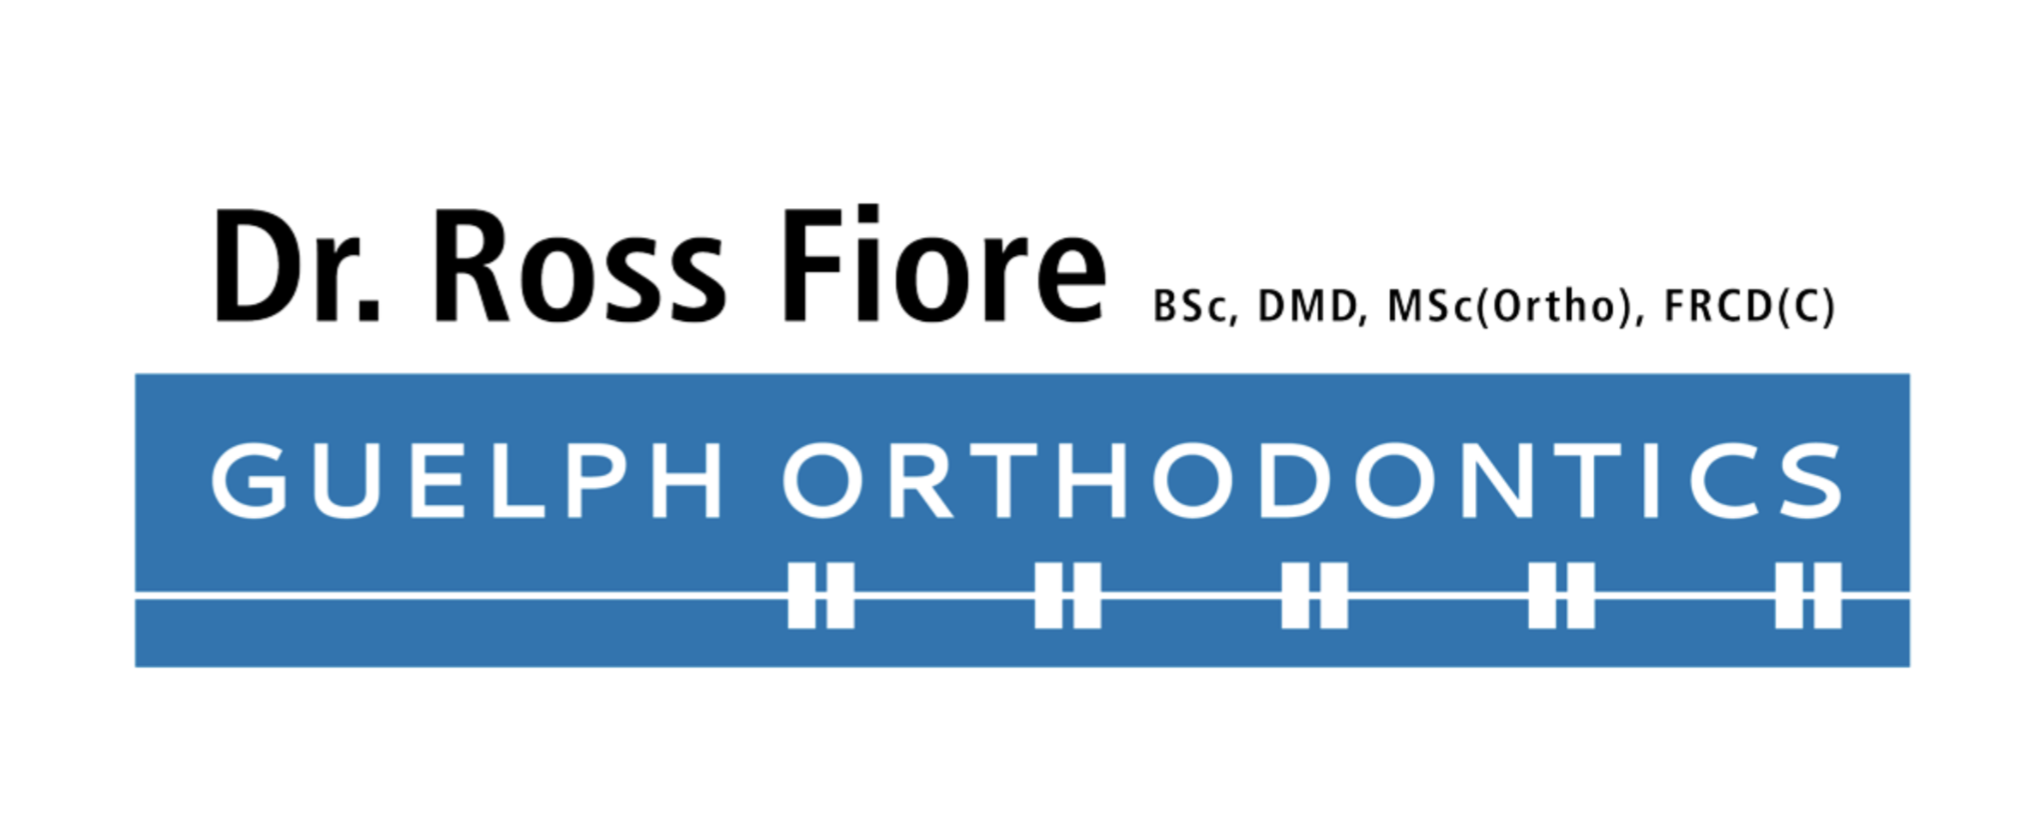 Guelph Orthodontics - Dr. Ross Fiore